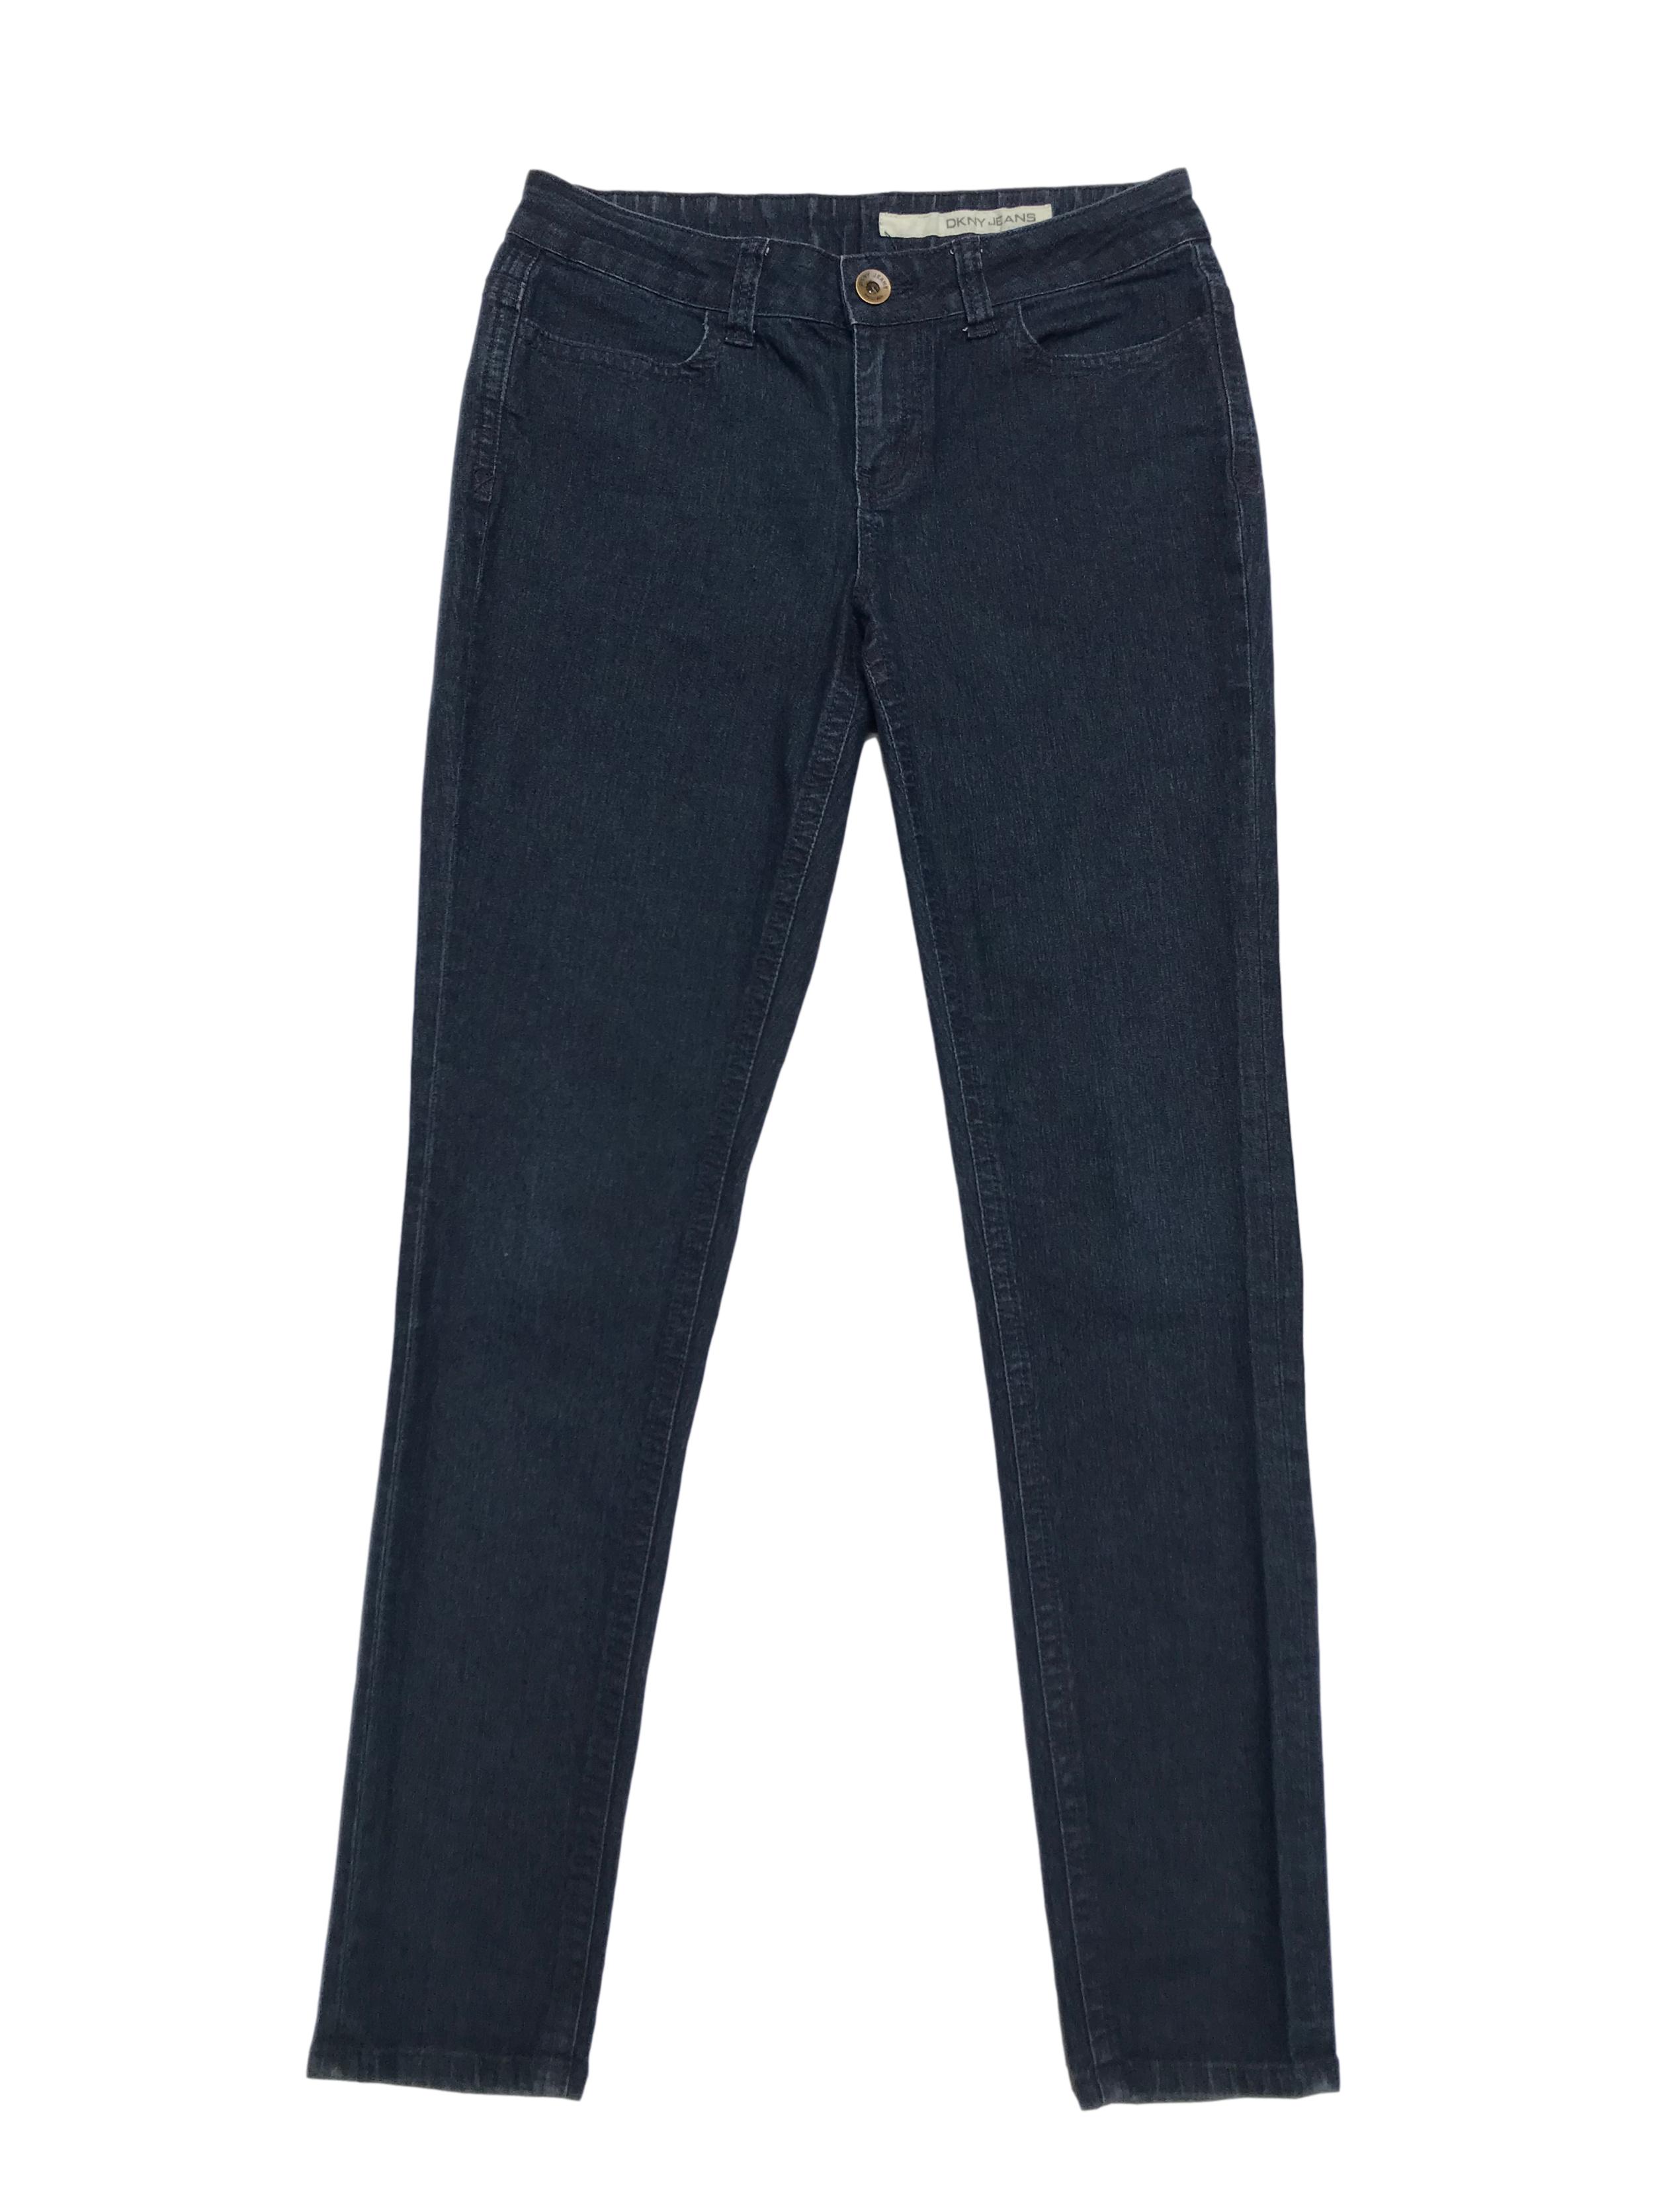 Jean DKNY corte slim, mid rise, con bolsillos laterales y traseros. Pretina 80cm